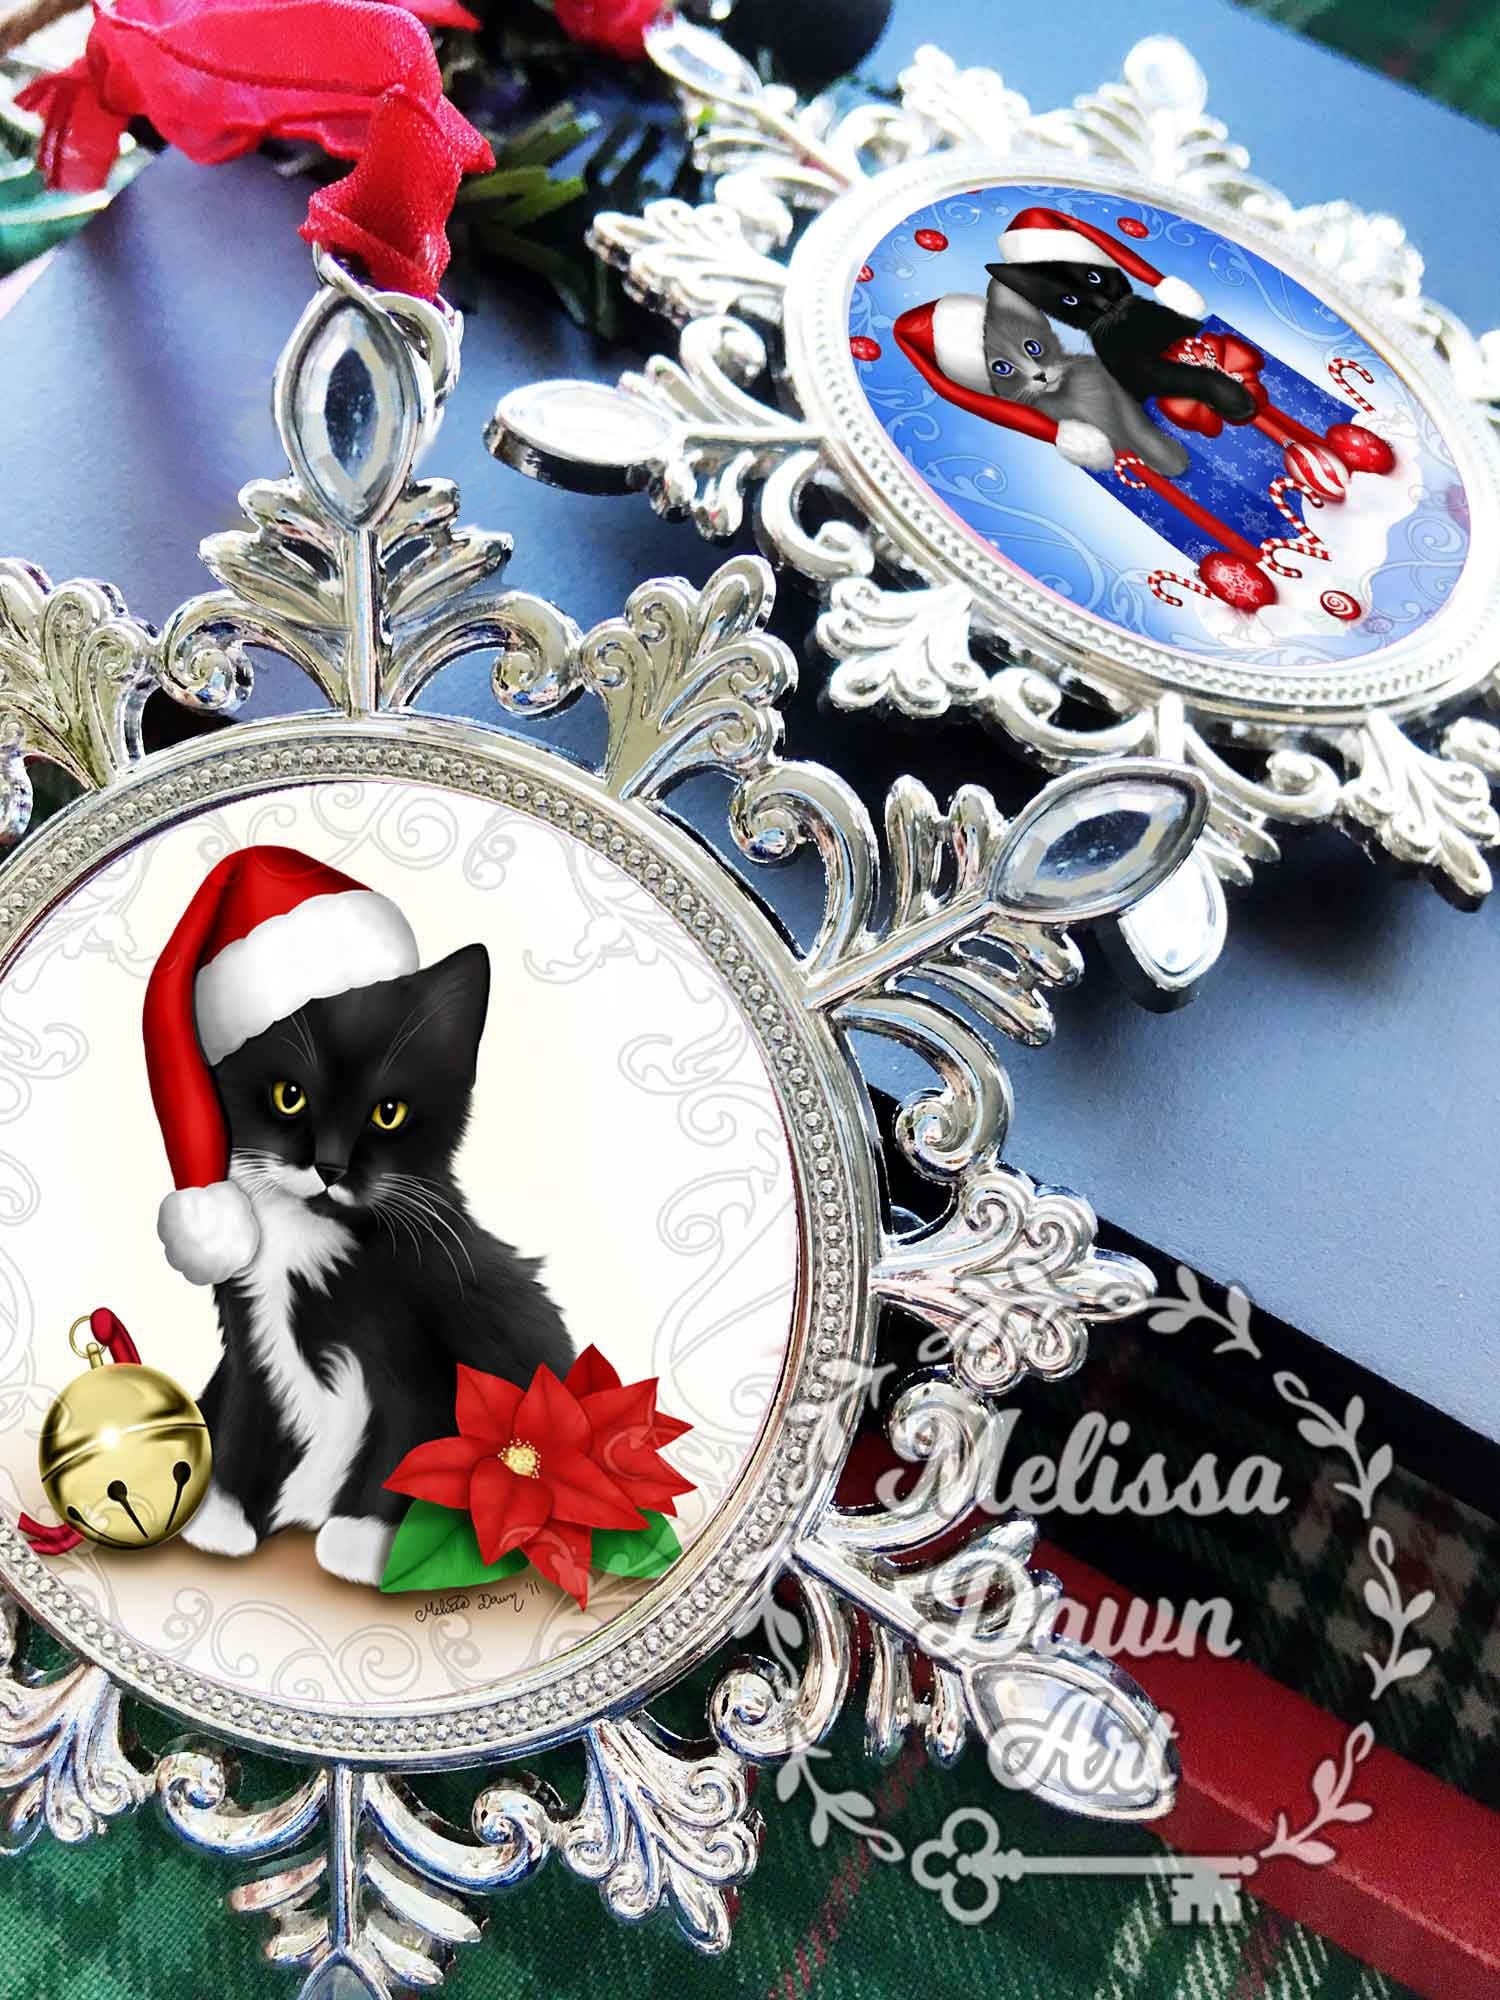 Personalized Cat Ornament / Black Cat Ornament / Custom Cat Ornament / Cat Christmas Ornament / Santa Cat / Black Cat in Santa Hat